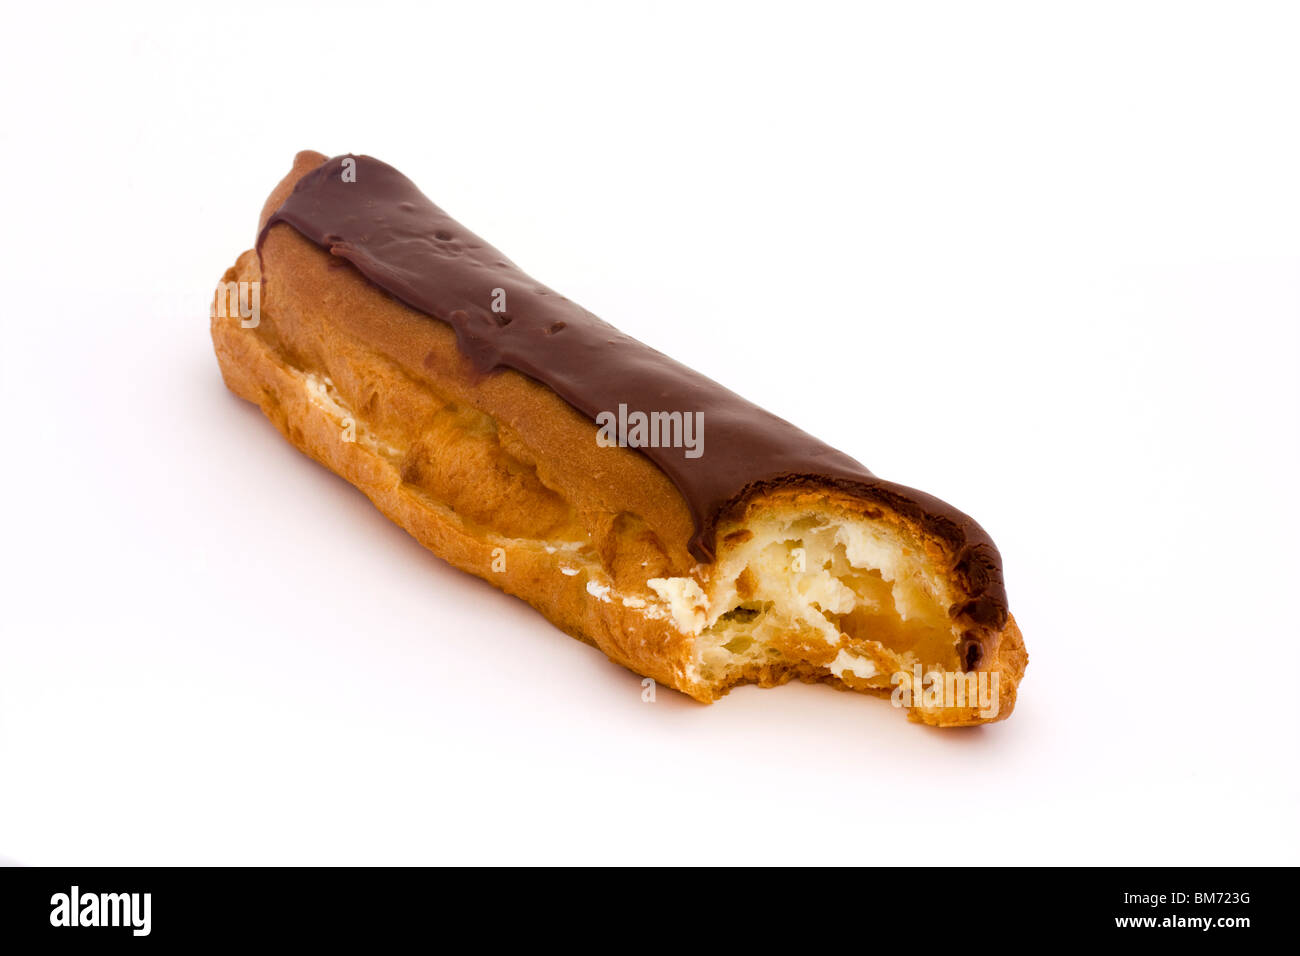 chcolate eclaire witha bite taken on a white background Stock Photo